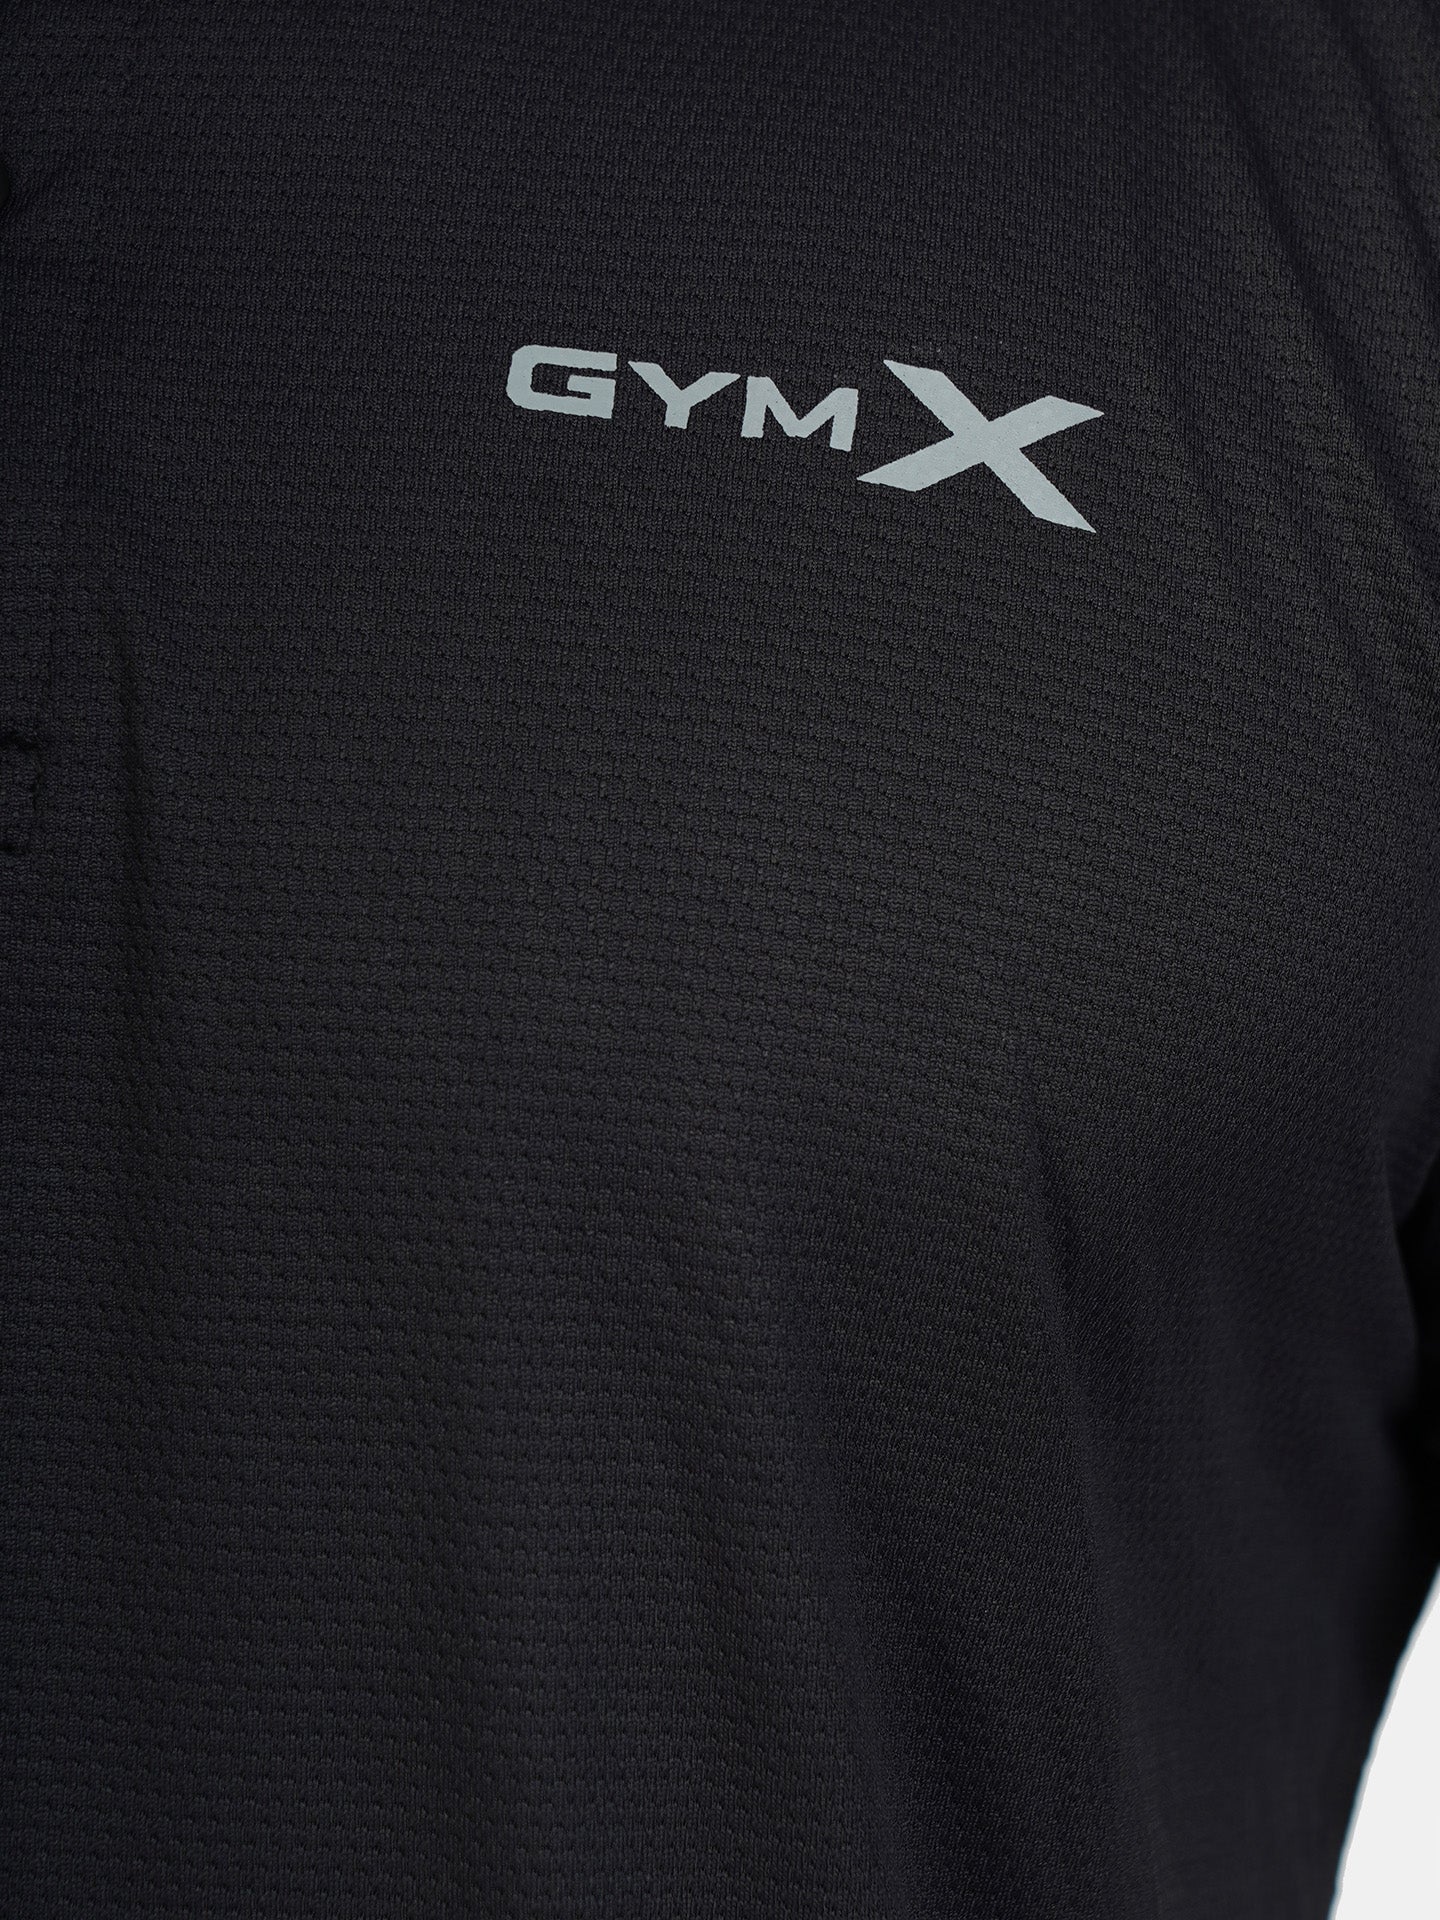 GymX Polo Tech Tee: Wicked Black